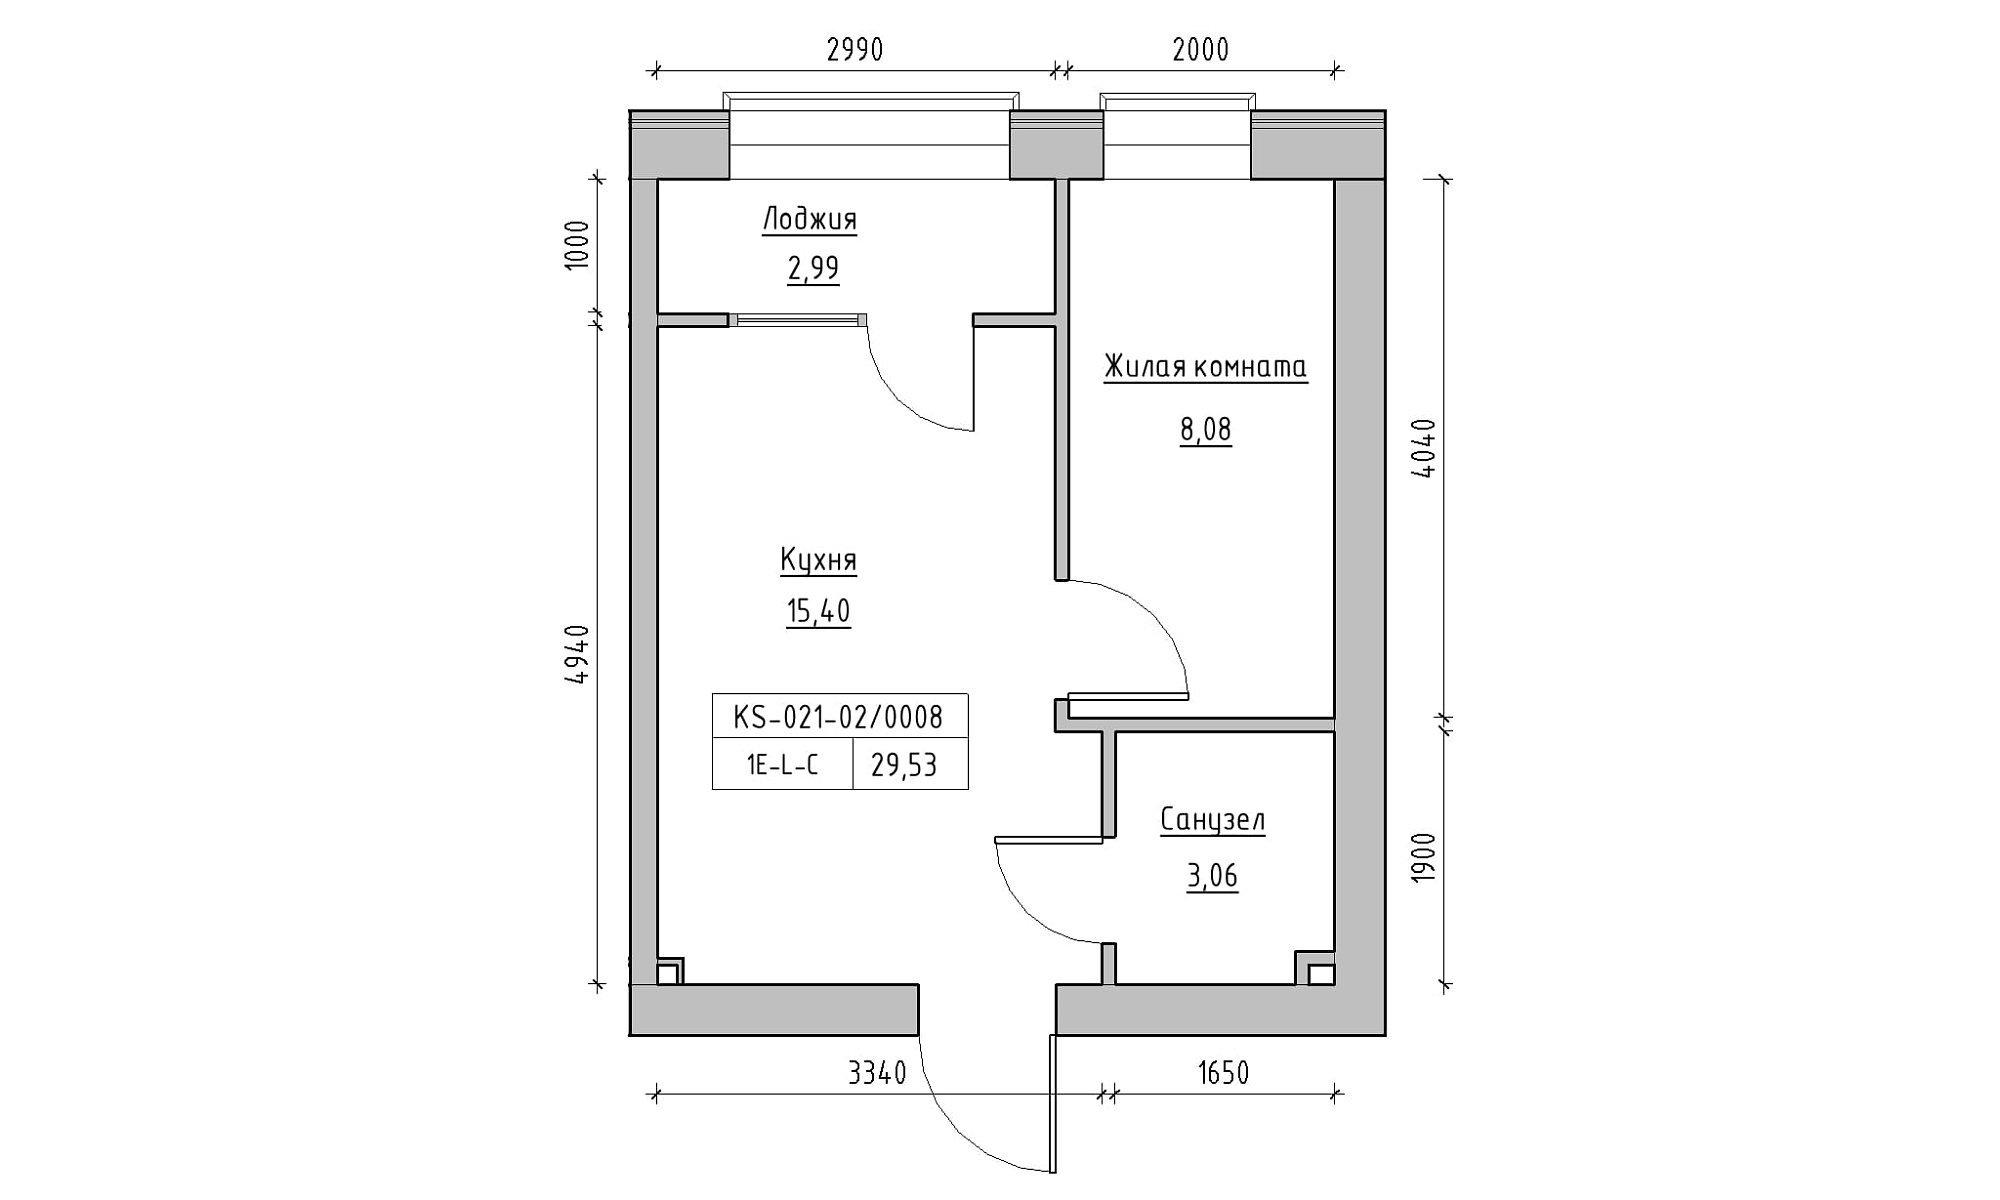 Planning 1-rm flats area 29.53m2, KS-021-02/0008.